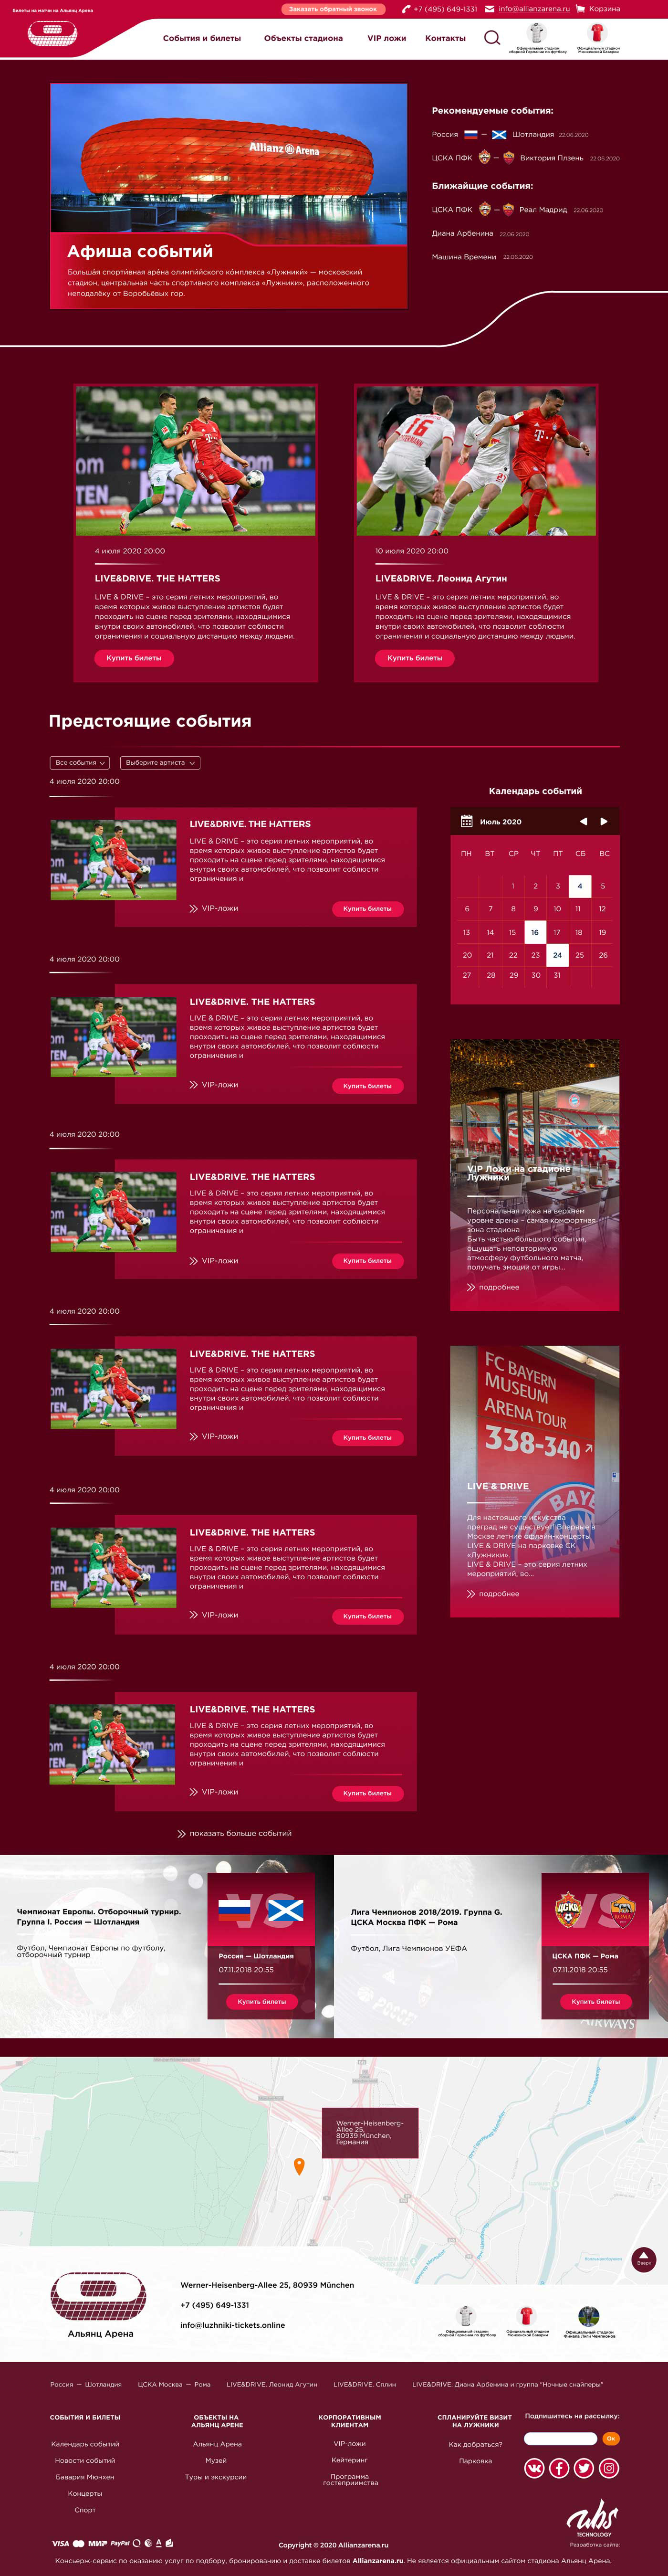 Allianz Bayern bayern munich Figma graphic design  UI/UX user interface Web Design  Webdesign Website